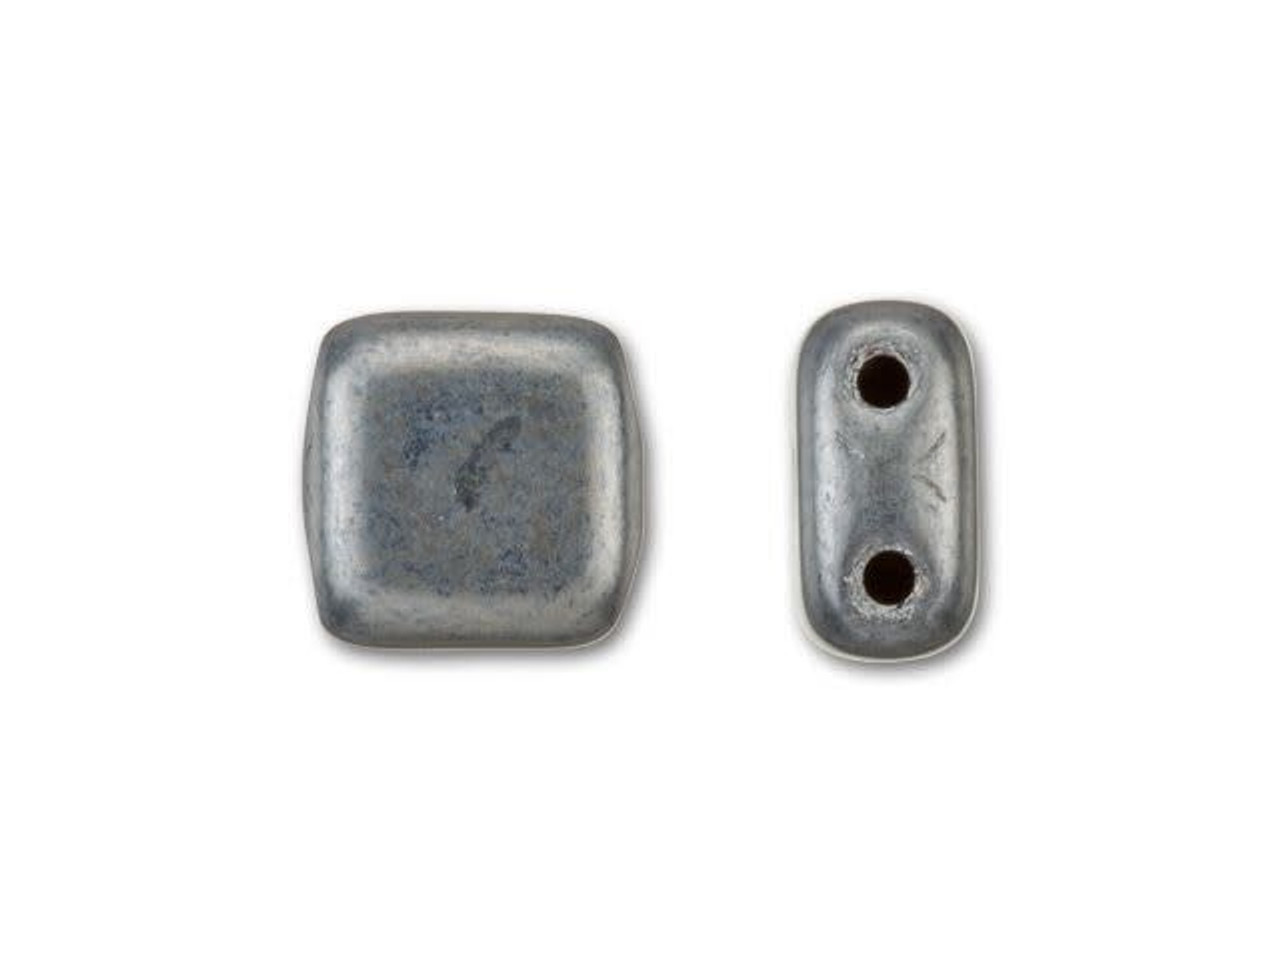 30 2 hole tile beads, hematite grey, 6mm.